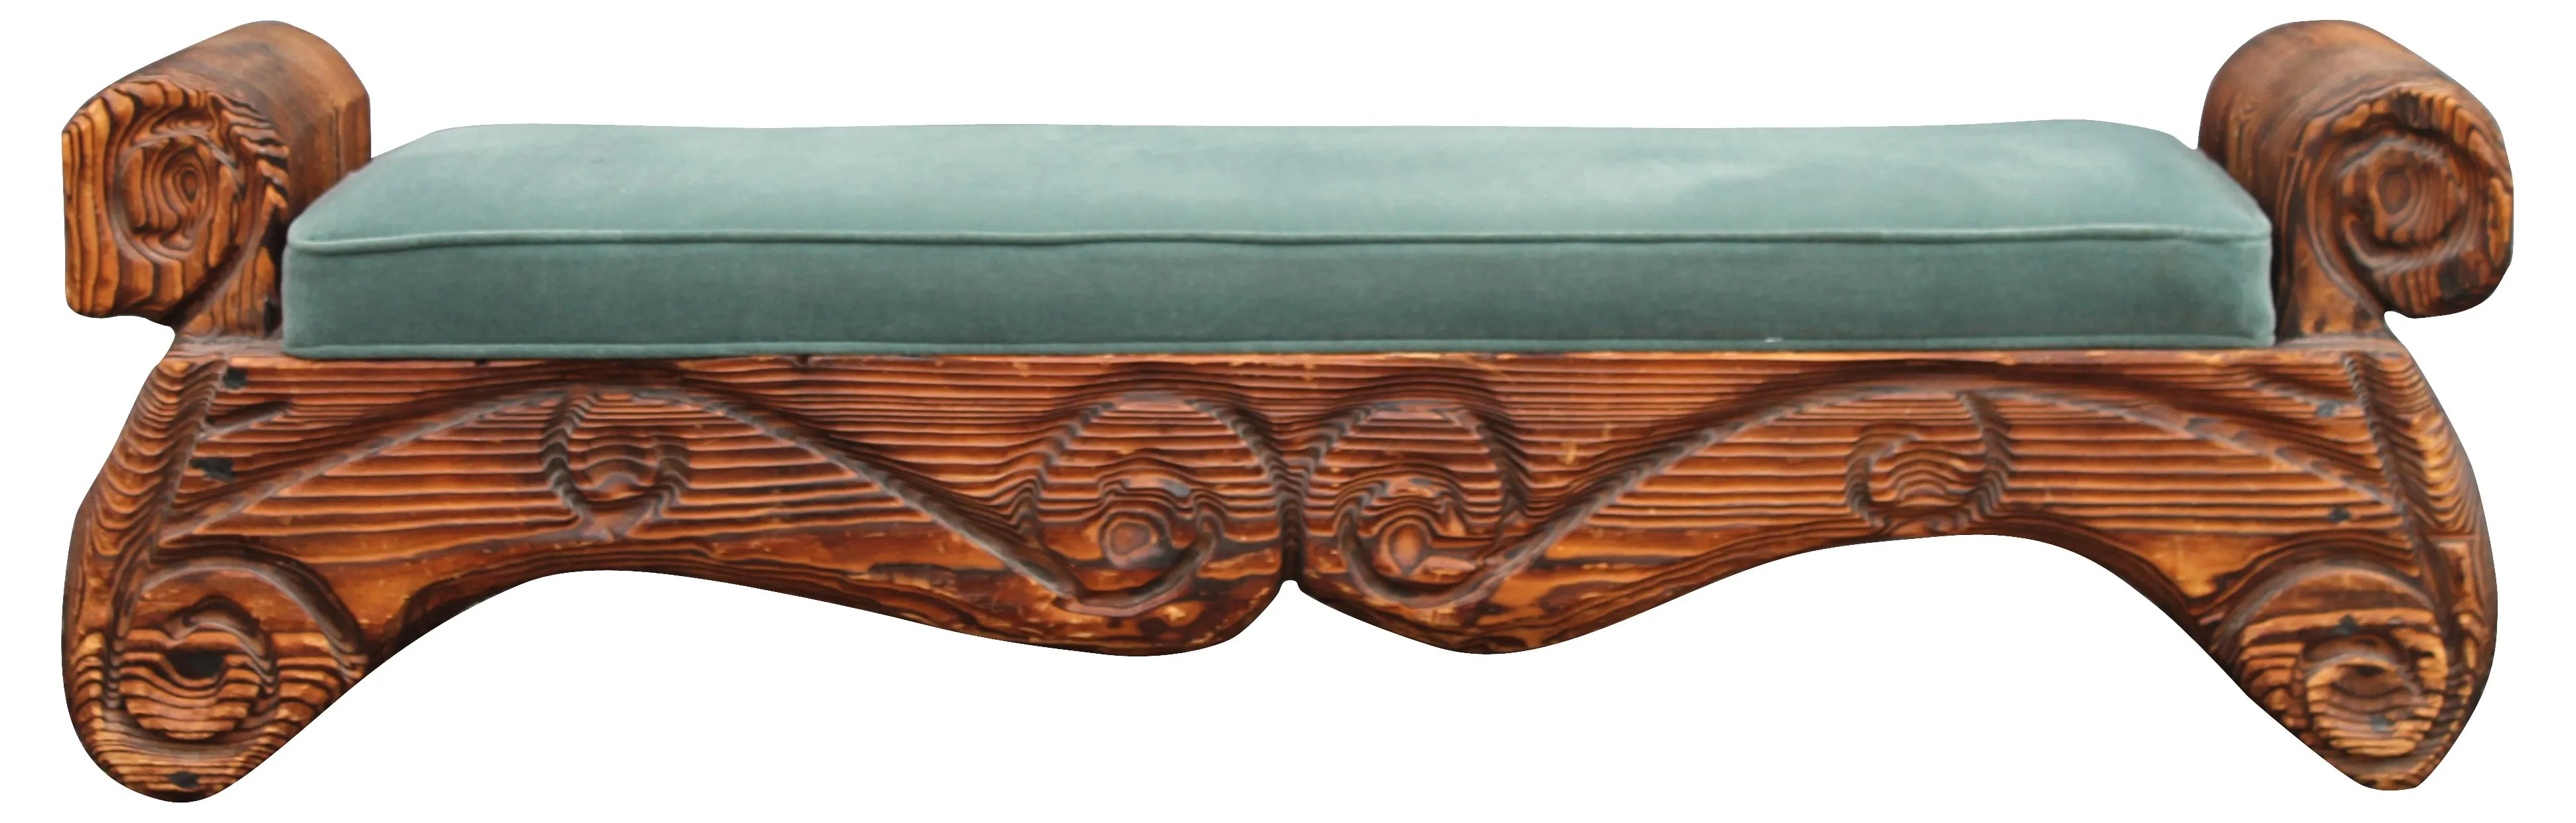 1940s Carved Wood Bench - Something Vintage - Brown